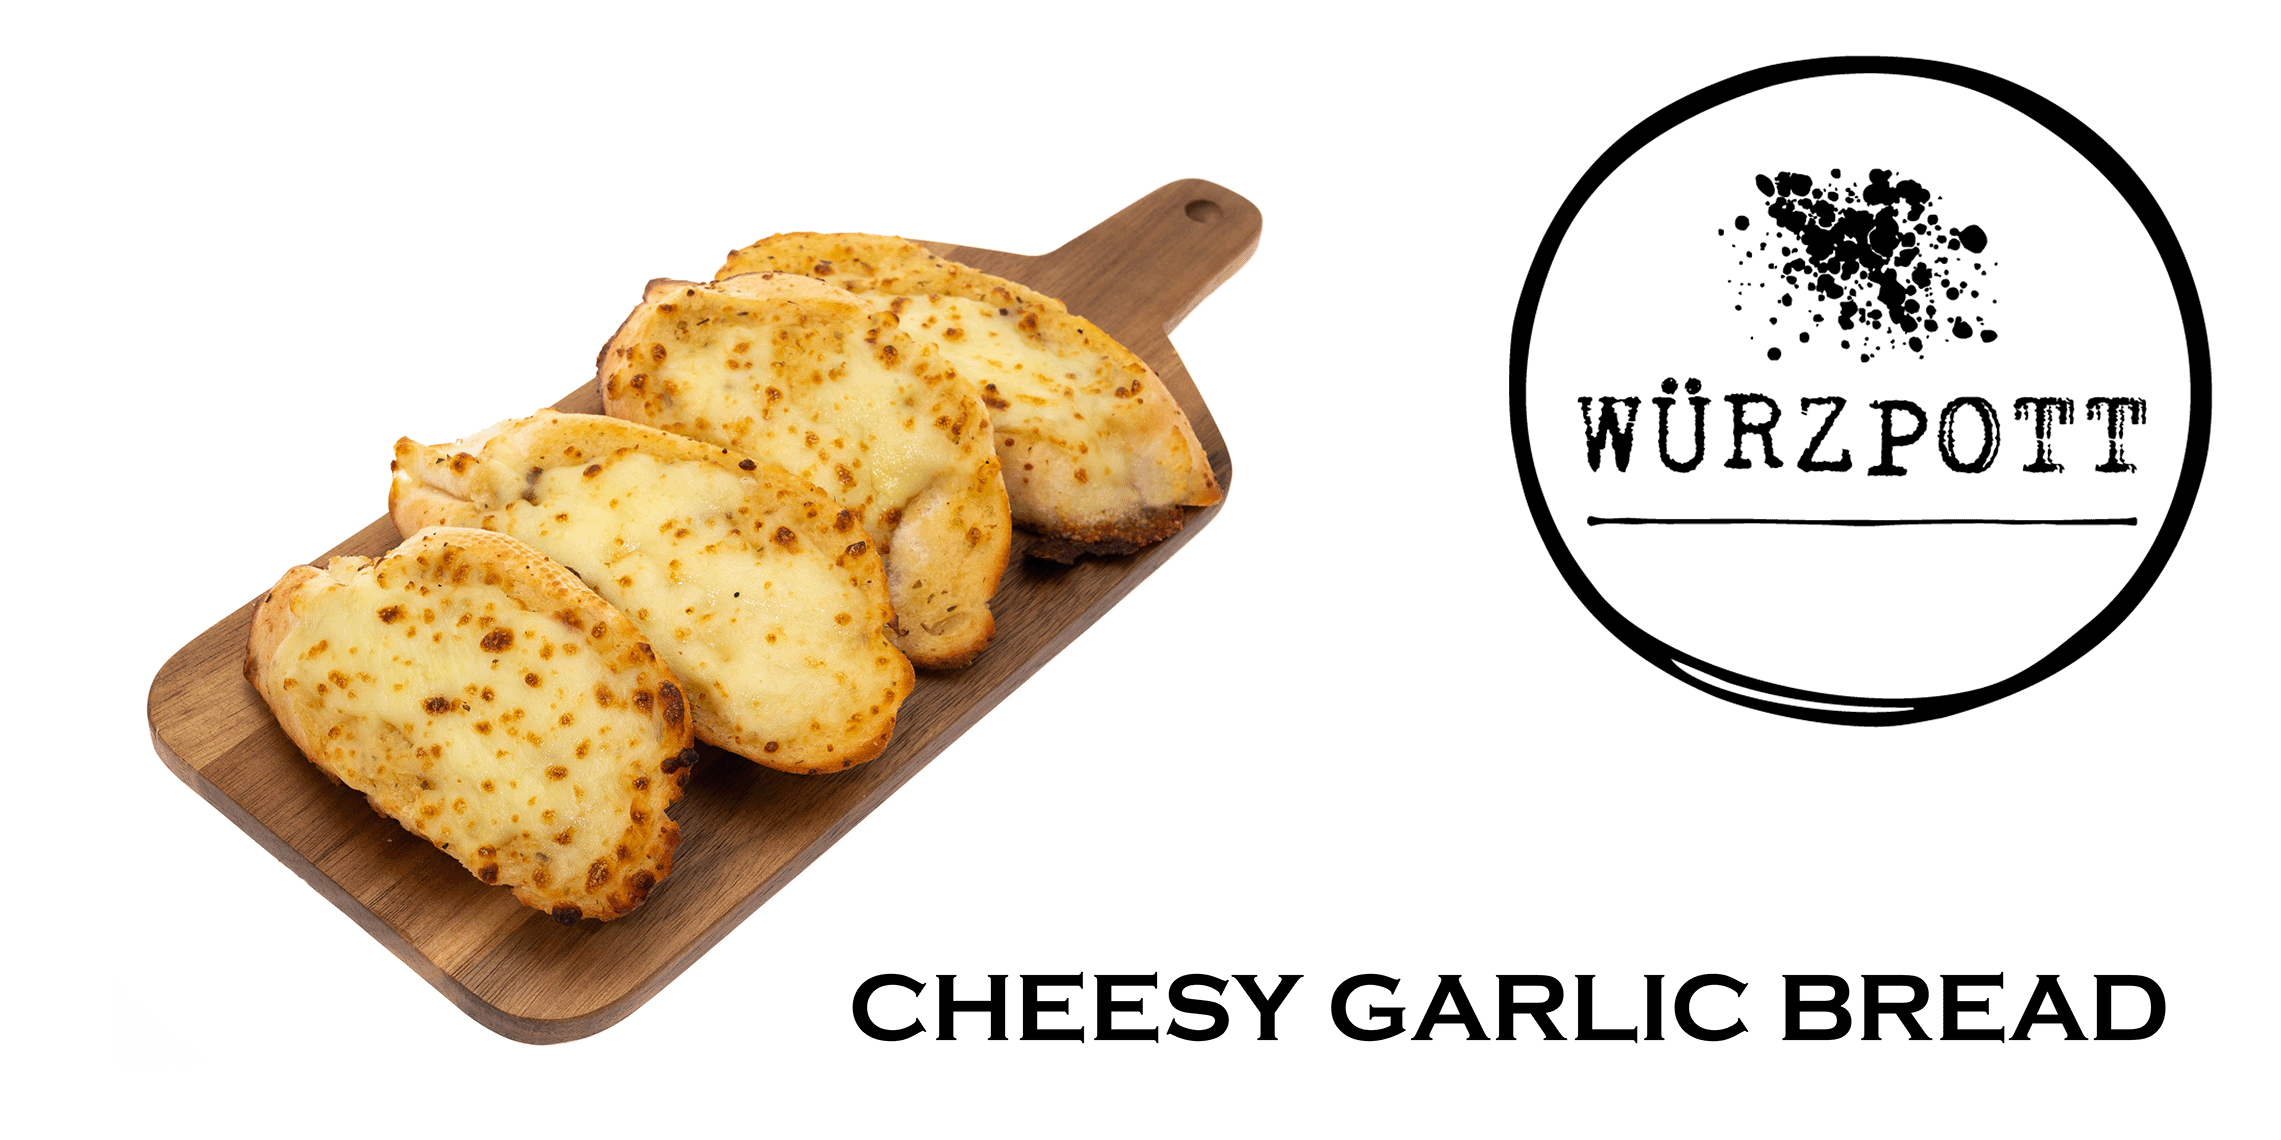 Wurzpott Cheesy Garlic Bread with Italian Seasoning